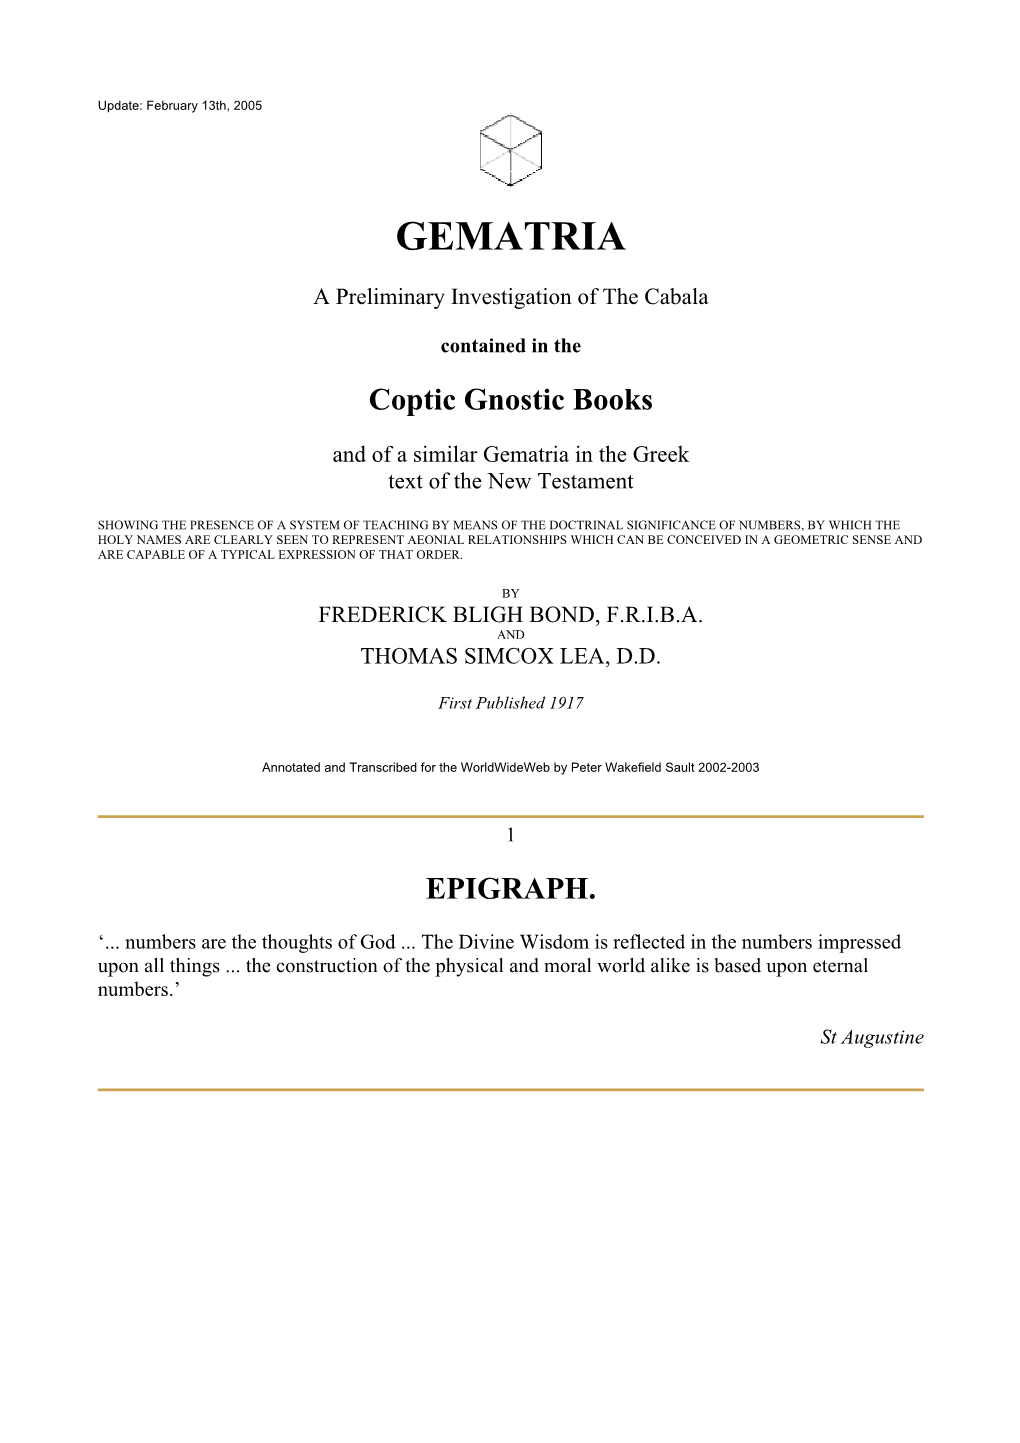 GEMATRIA: a Preliminary Investigation of the Cabala